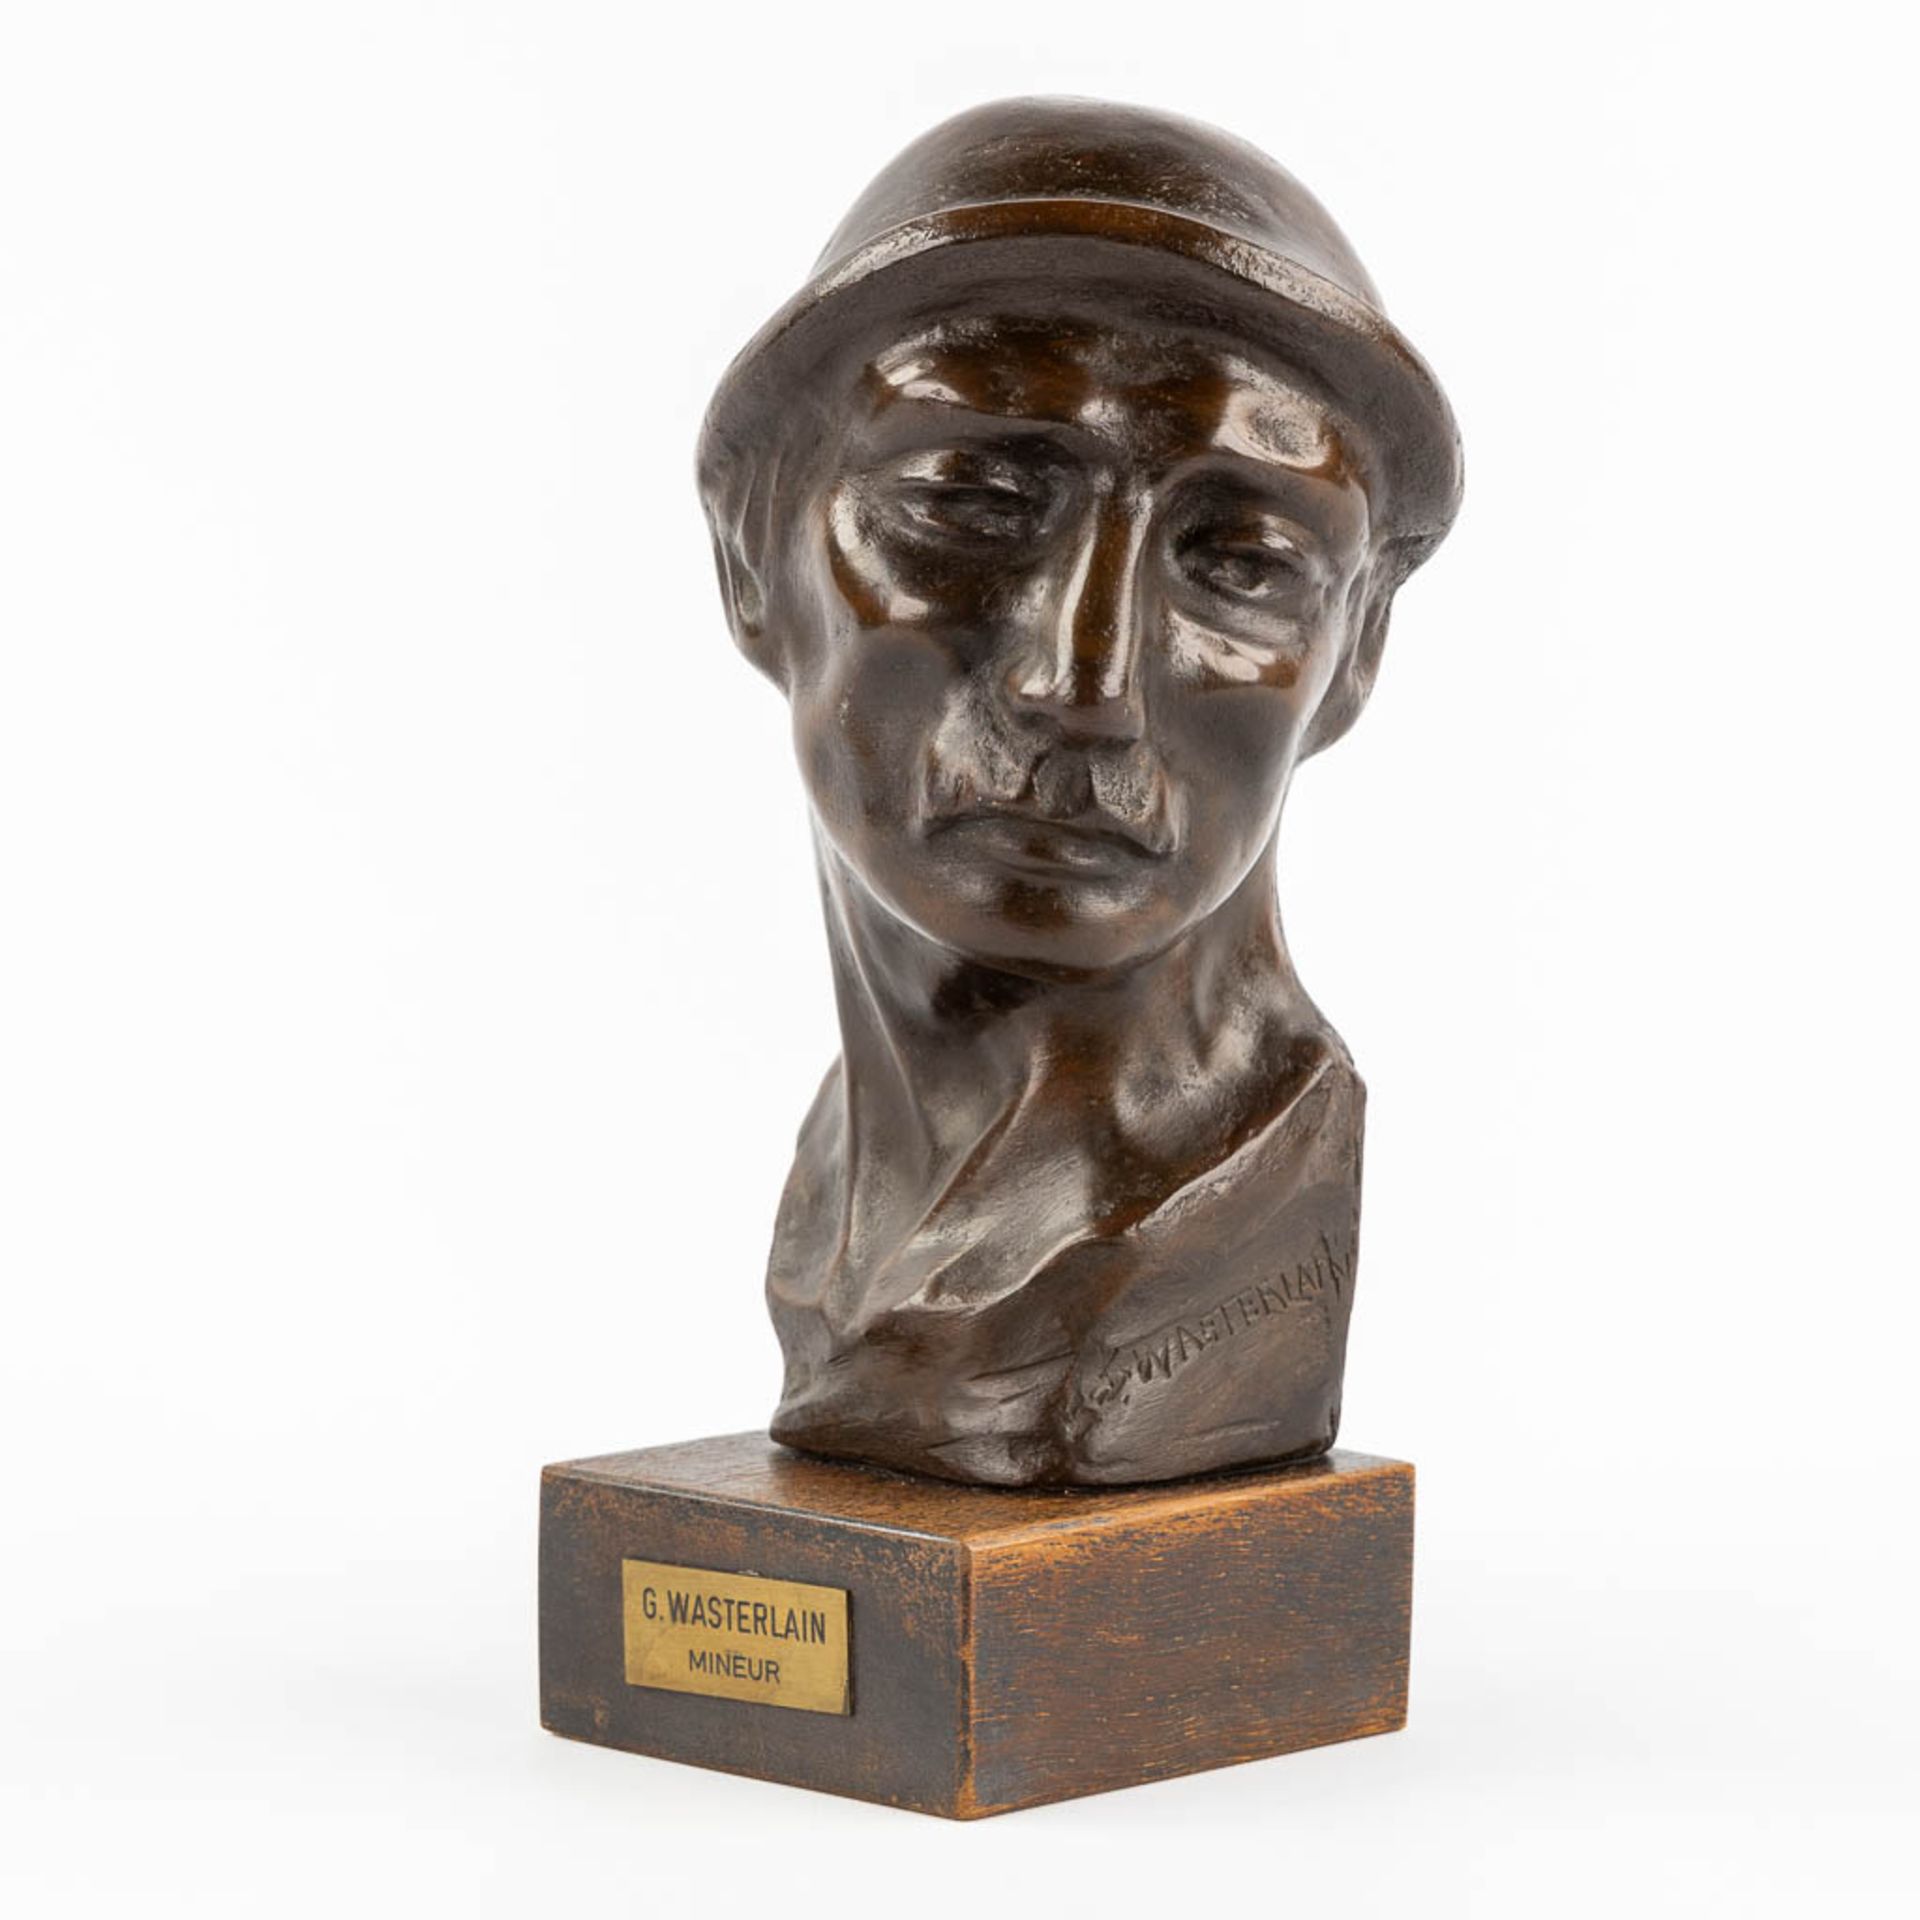 Georges WASTERLAIN (1889-1963) 'Mineur' patinated bronze. (L:11 x W:13 x H:26,5 cm)